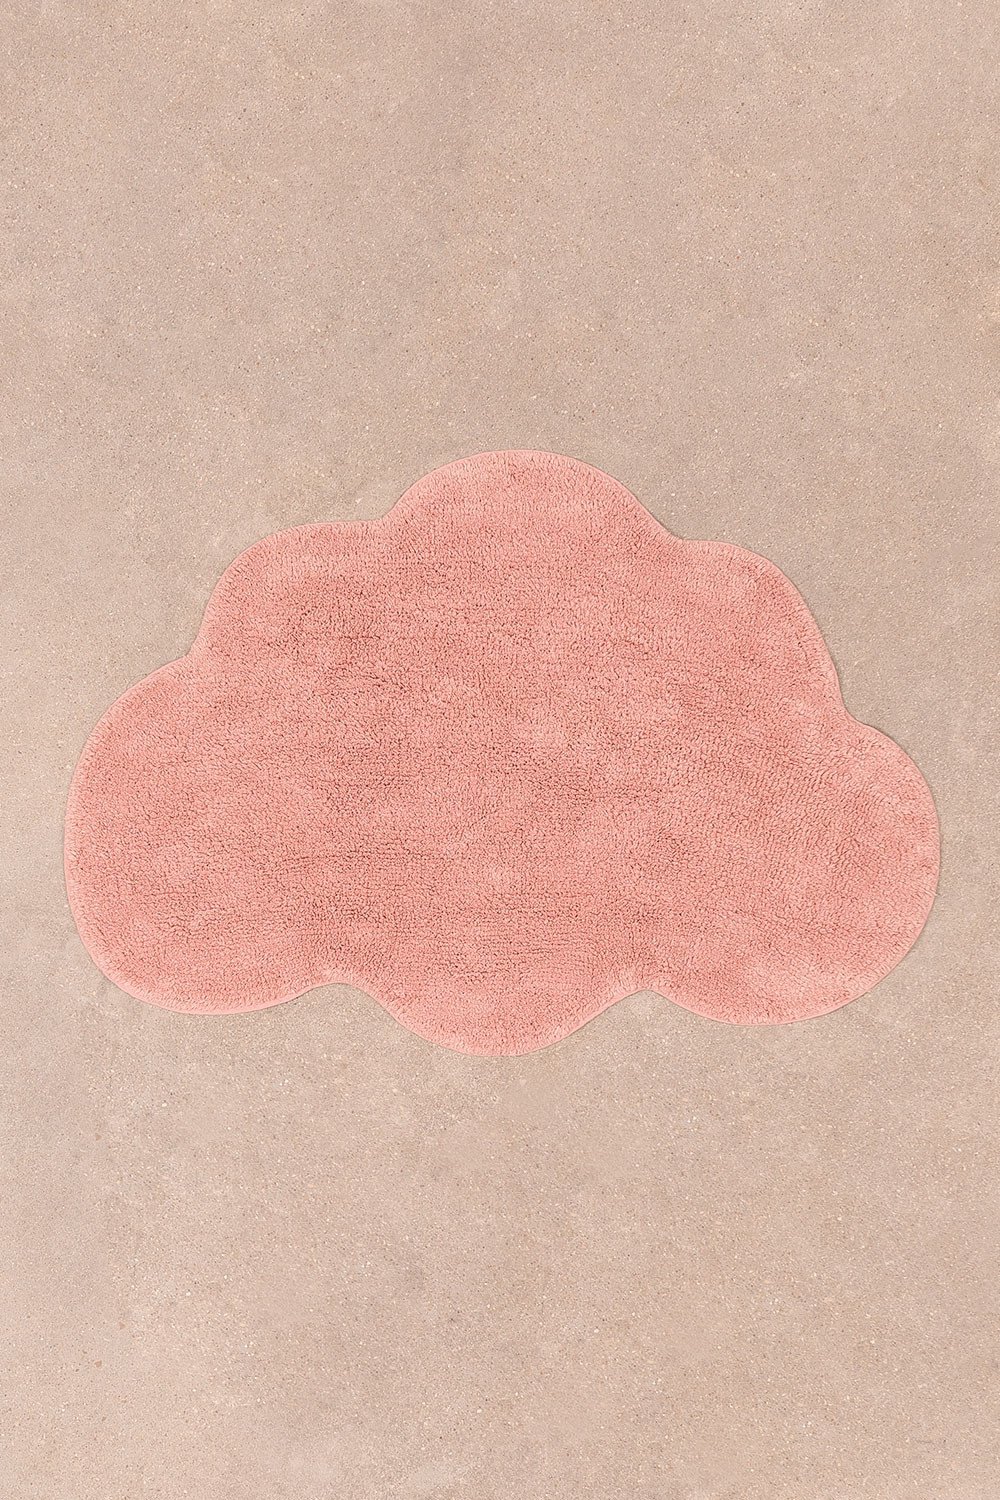 Cotton Rug (69 x 100 cm) Cloud Kids, gallery image 1